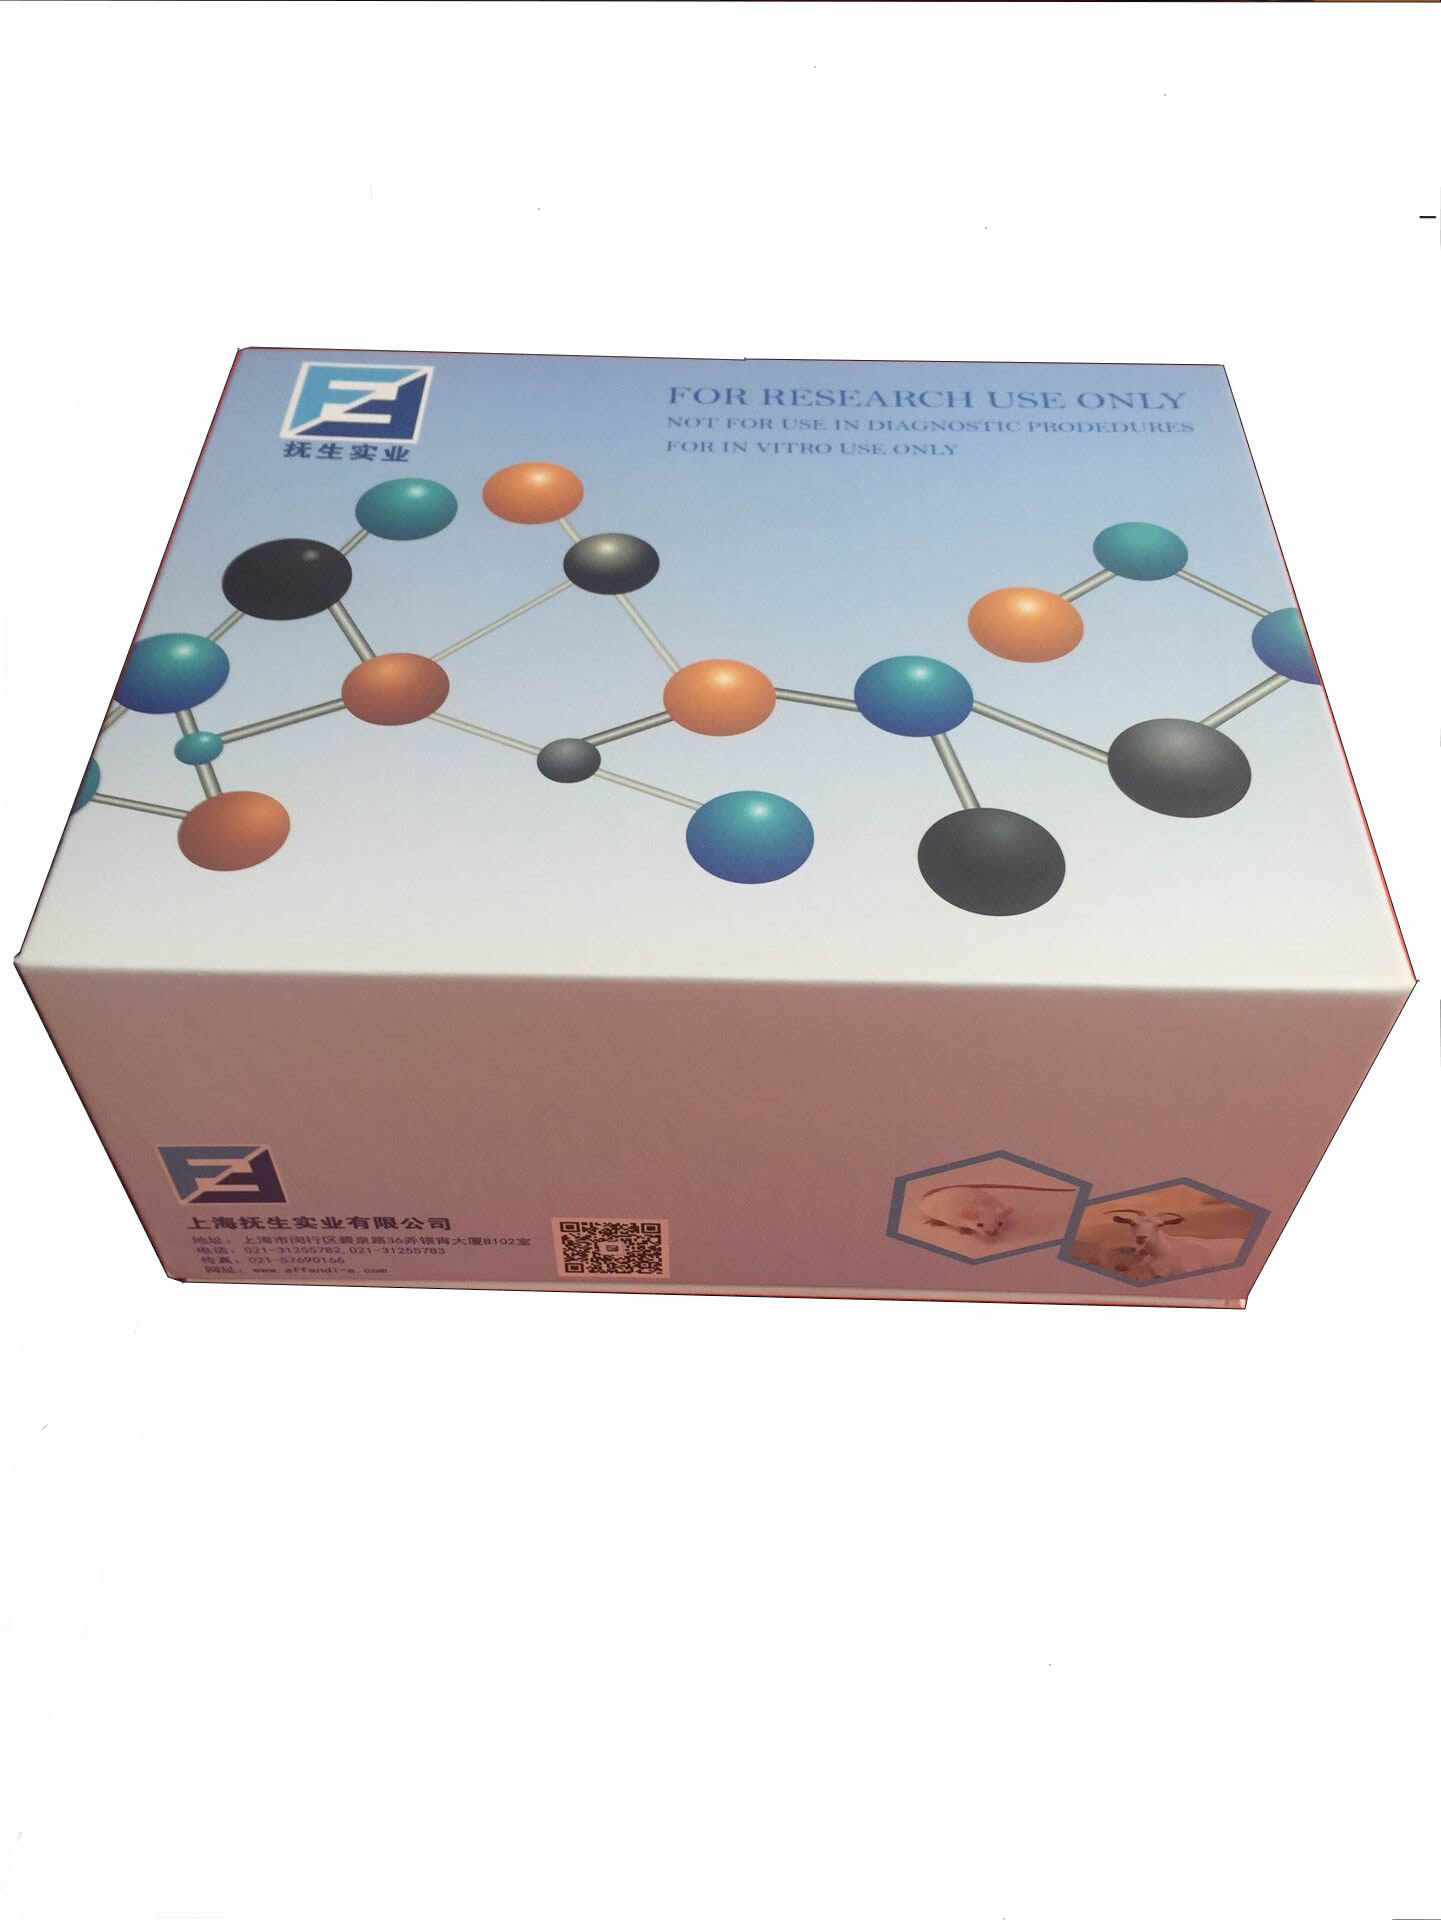 小鼠抗心磷脂抗体IgG(ACA-IgG)ELISA试剂盒,Mouse anti-cardiolipin antibody IgG,ACA-IgG ELISA Kit